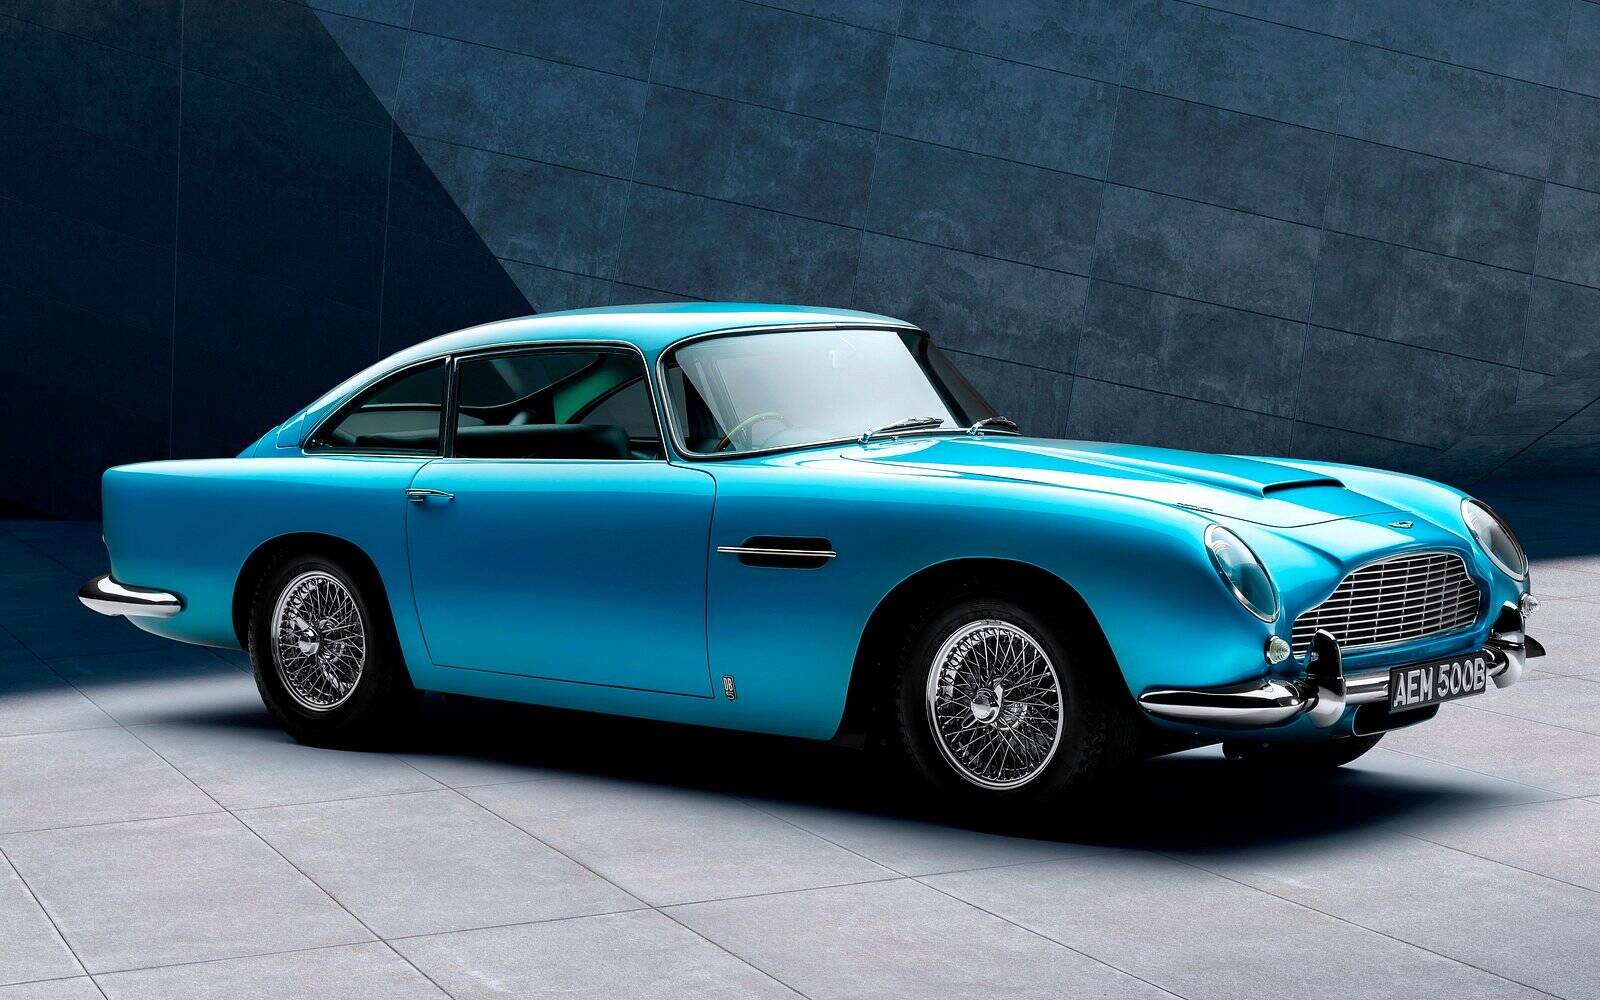 La célèbre et ravissante Aston Martin DB5 a 60 ans 588120-la-celebre-et-ravissante-aston-martin-db5-a-60-ans